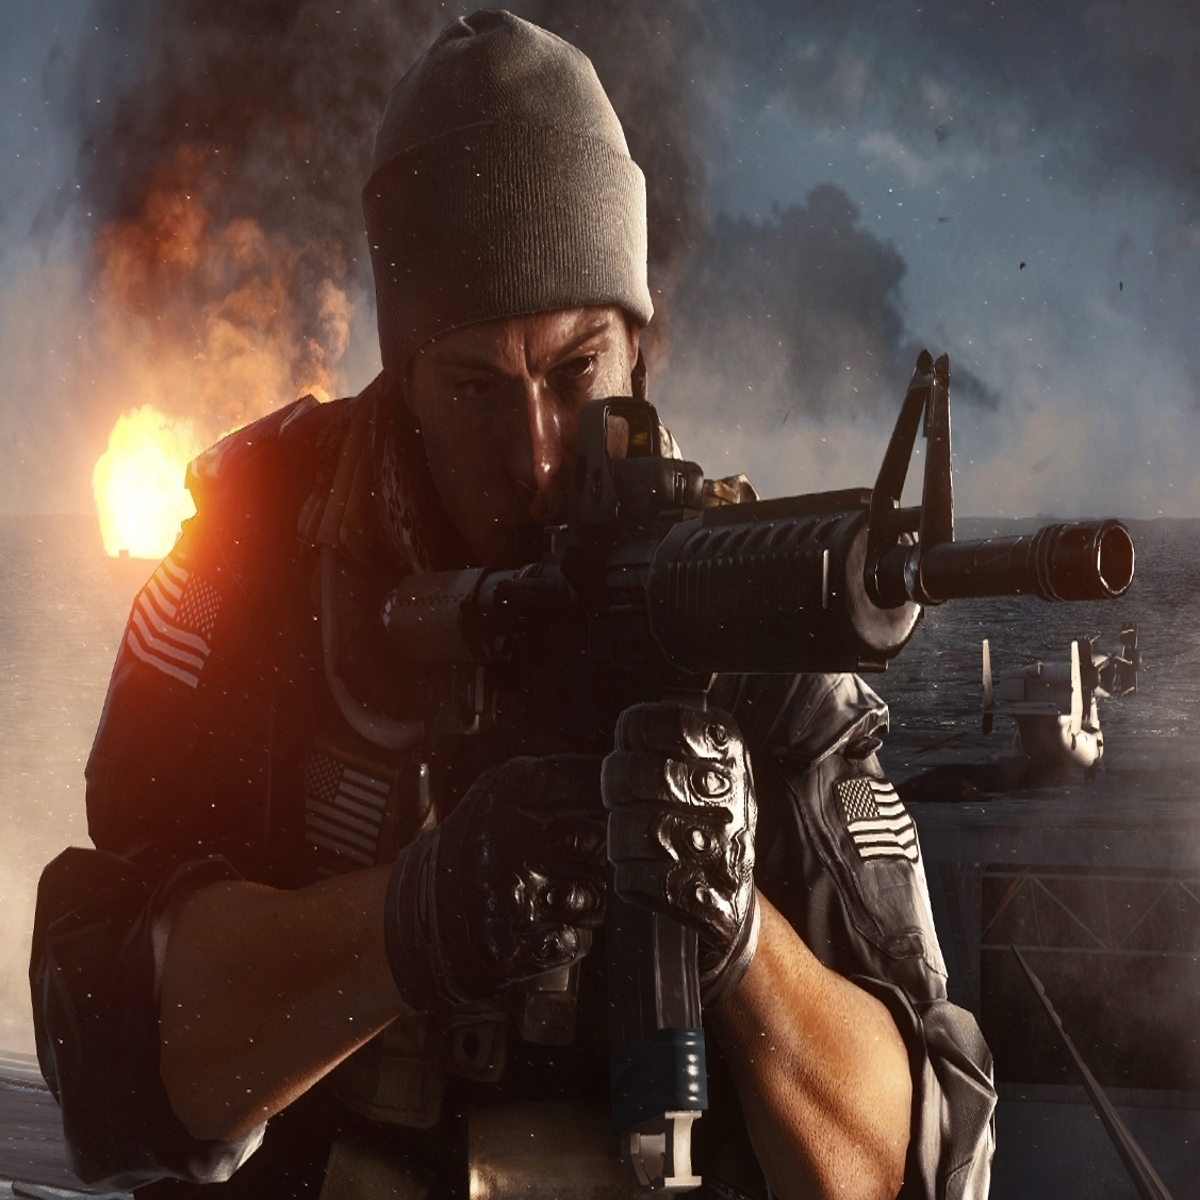 Battlefield 4 - Let's Play Multiplayer (PS3) LIVE - Eurogamer